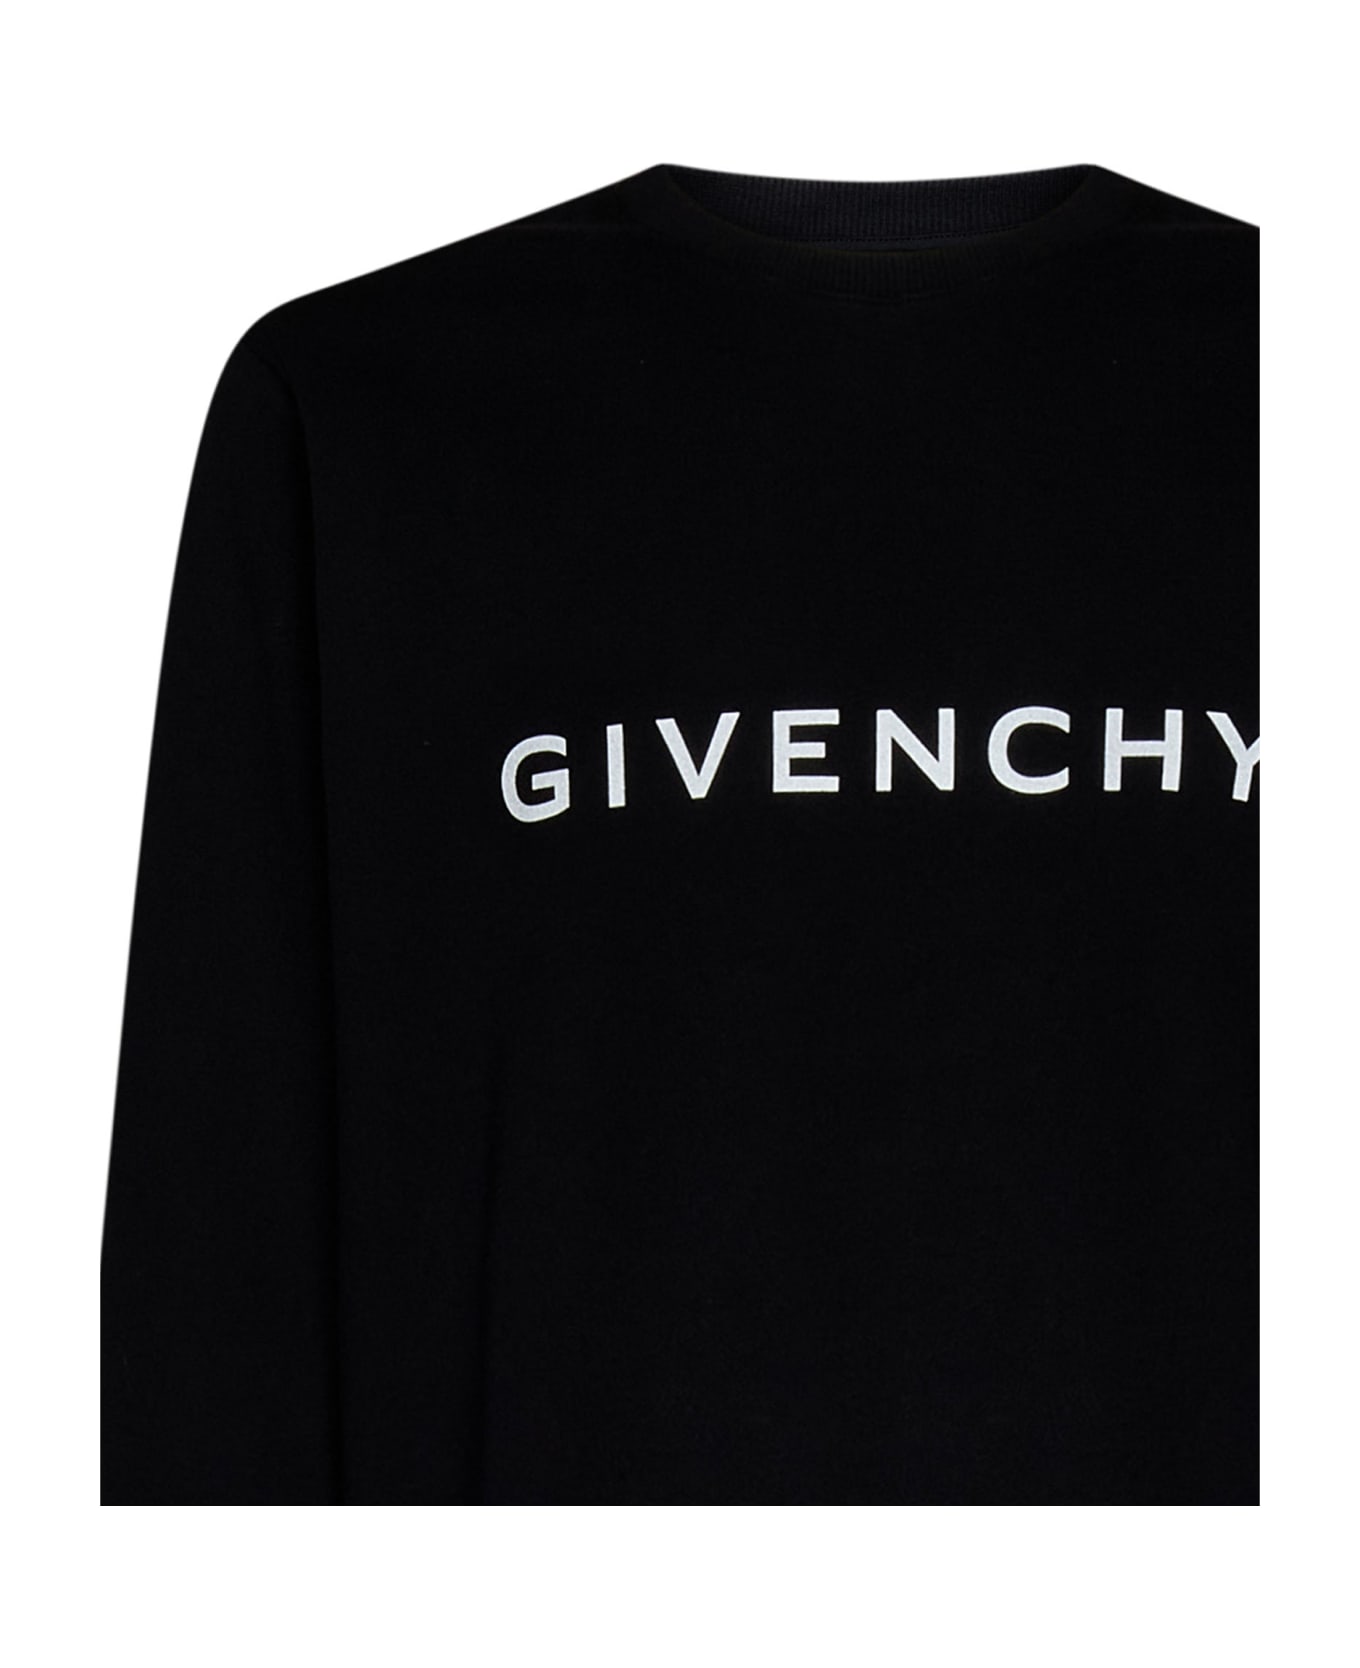 Givenchy Archetype Sweatshirt - Black フリース